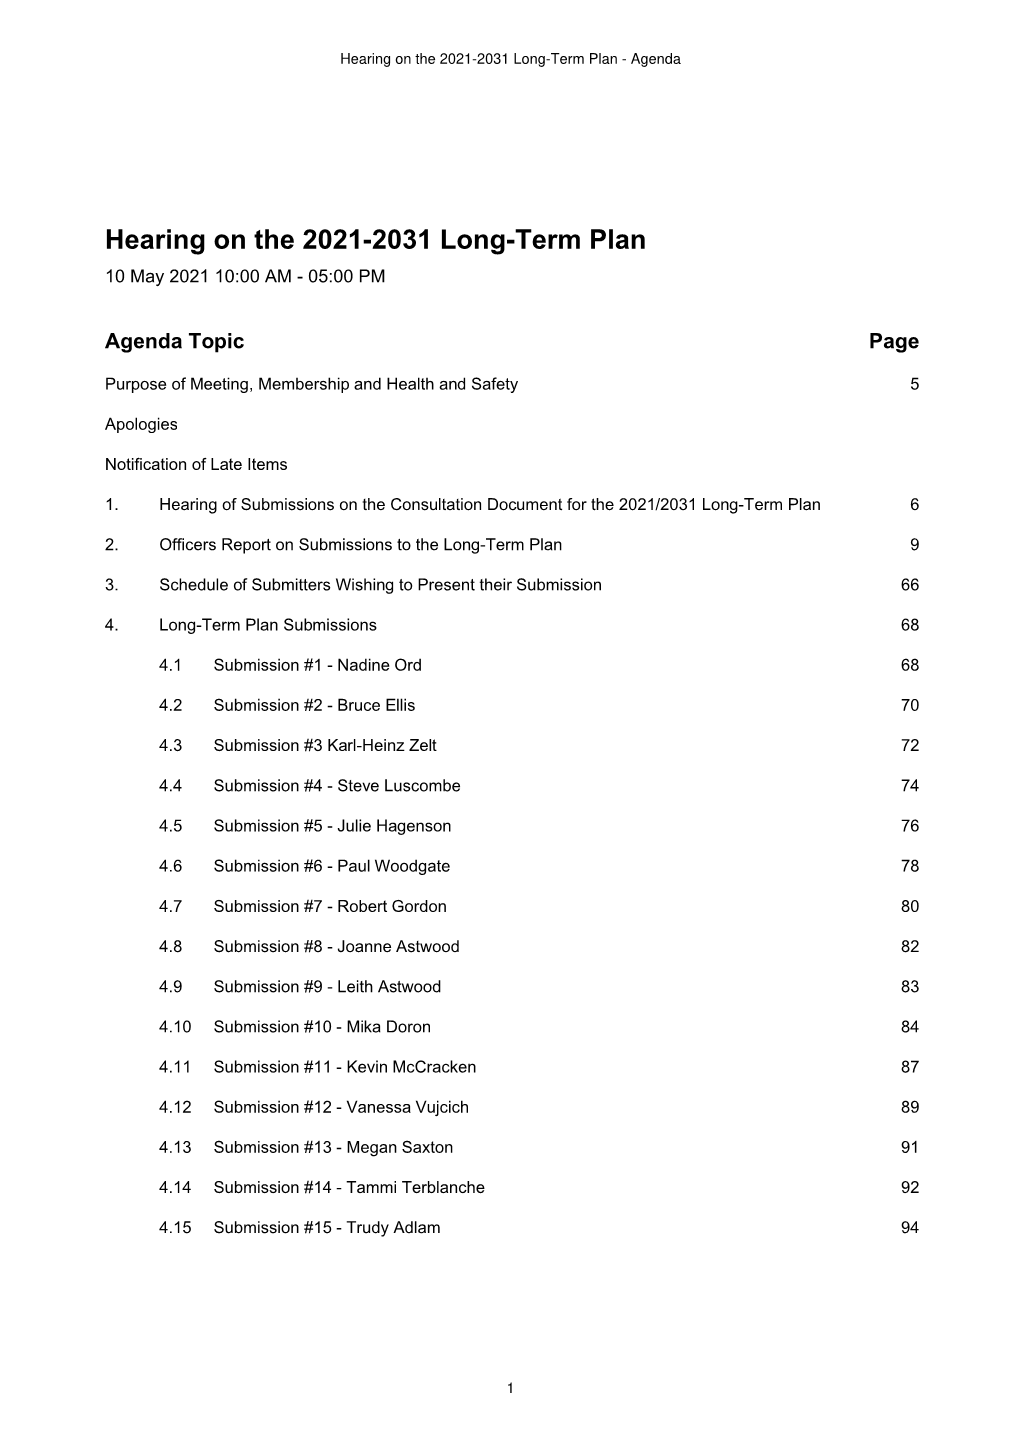 Long-Term Plan Hearing Agenda